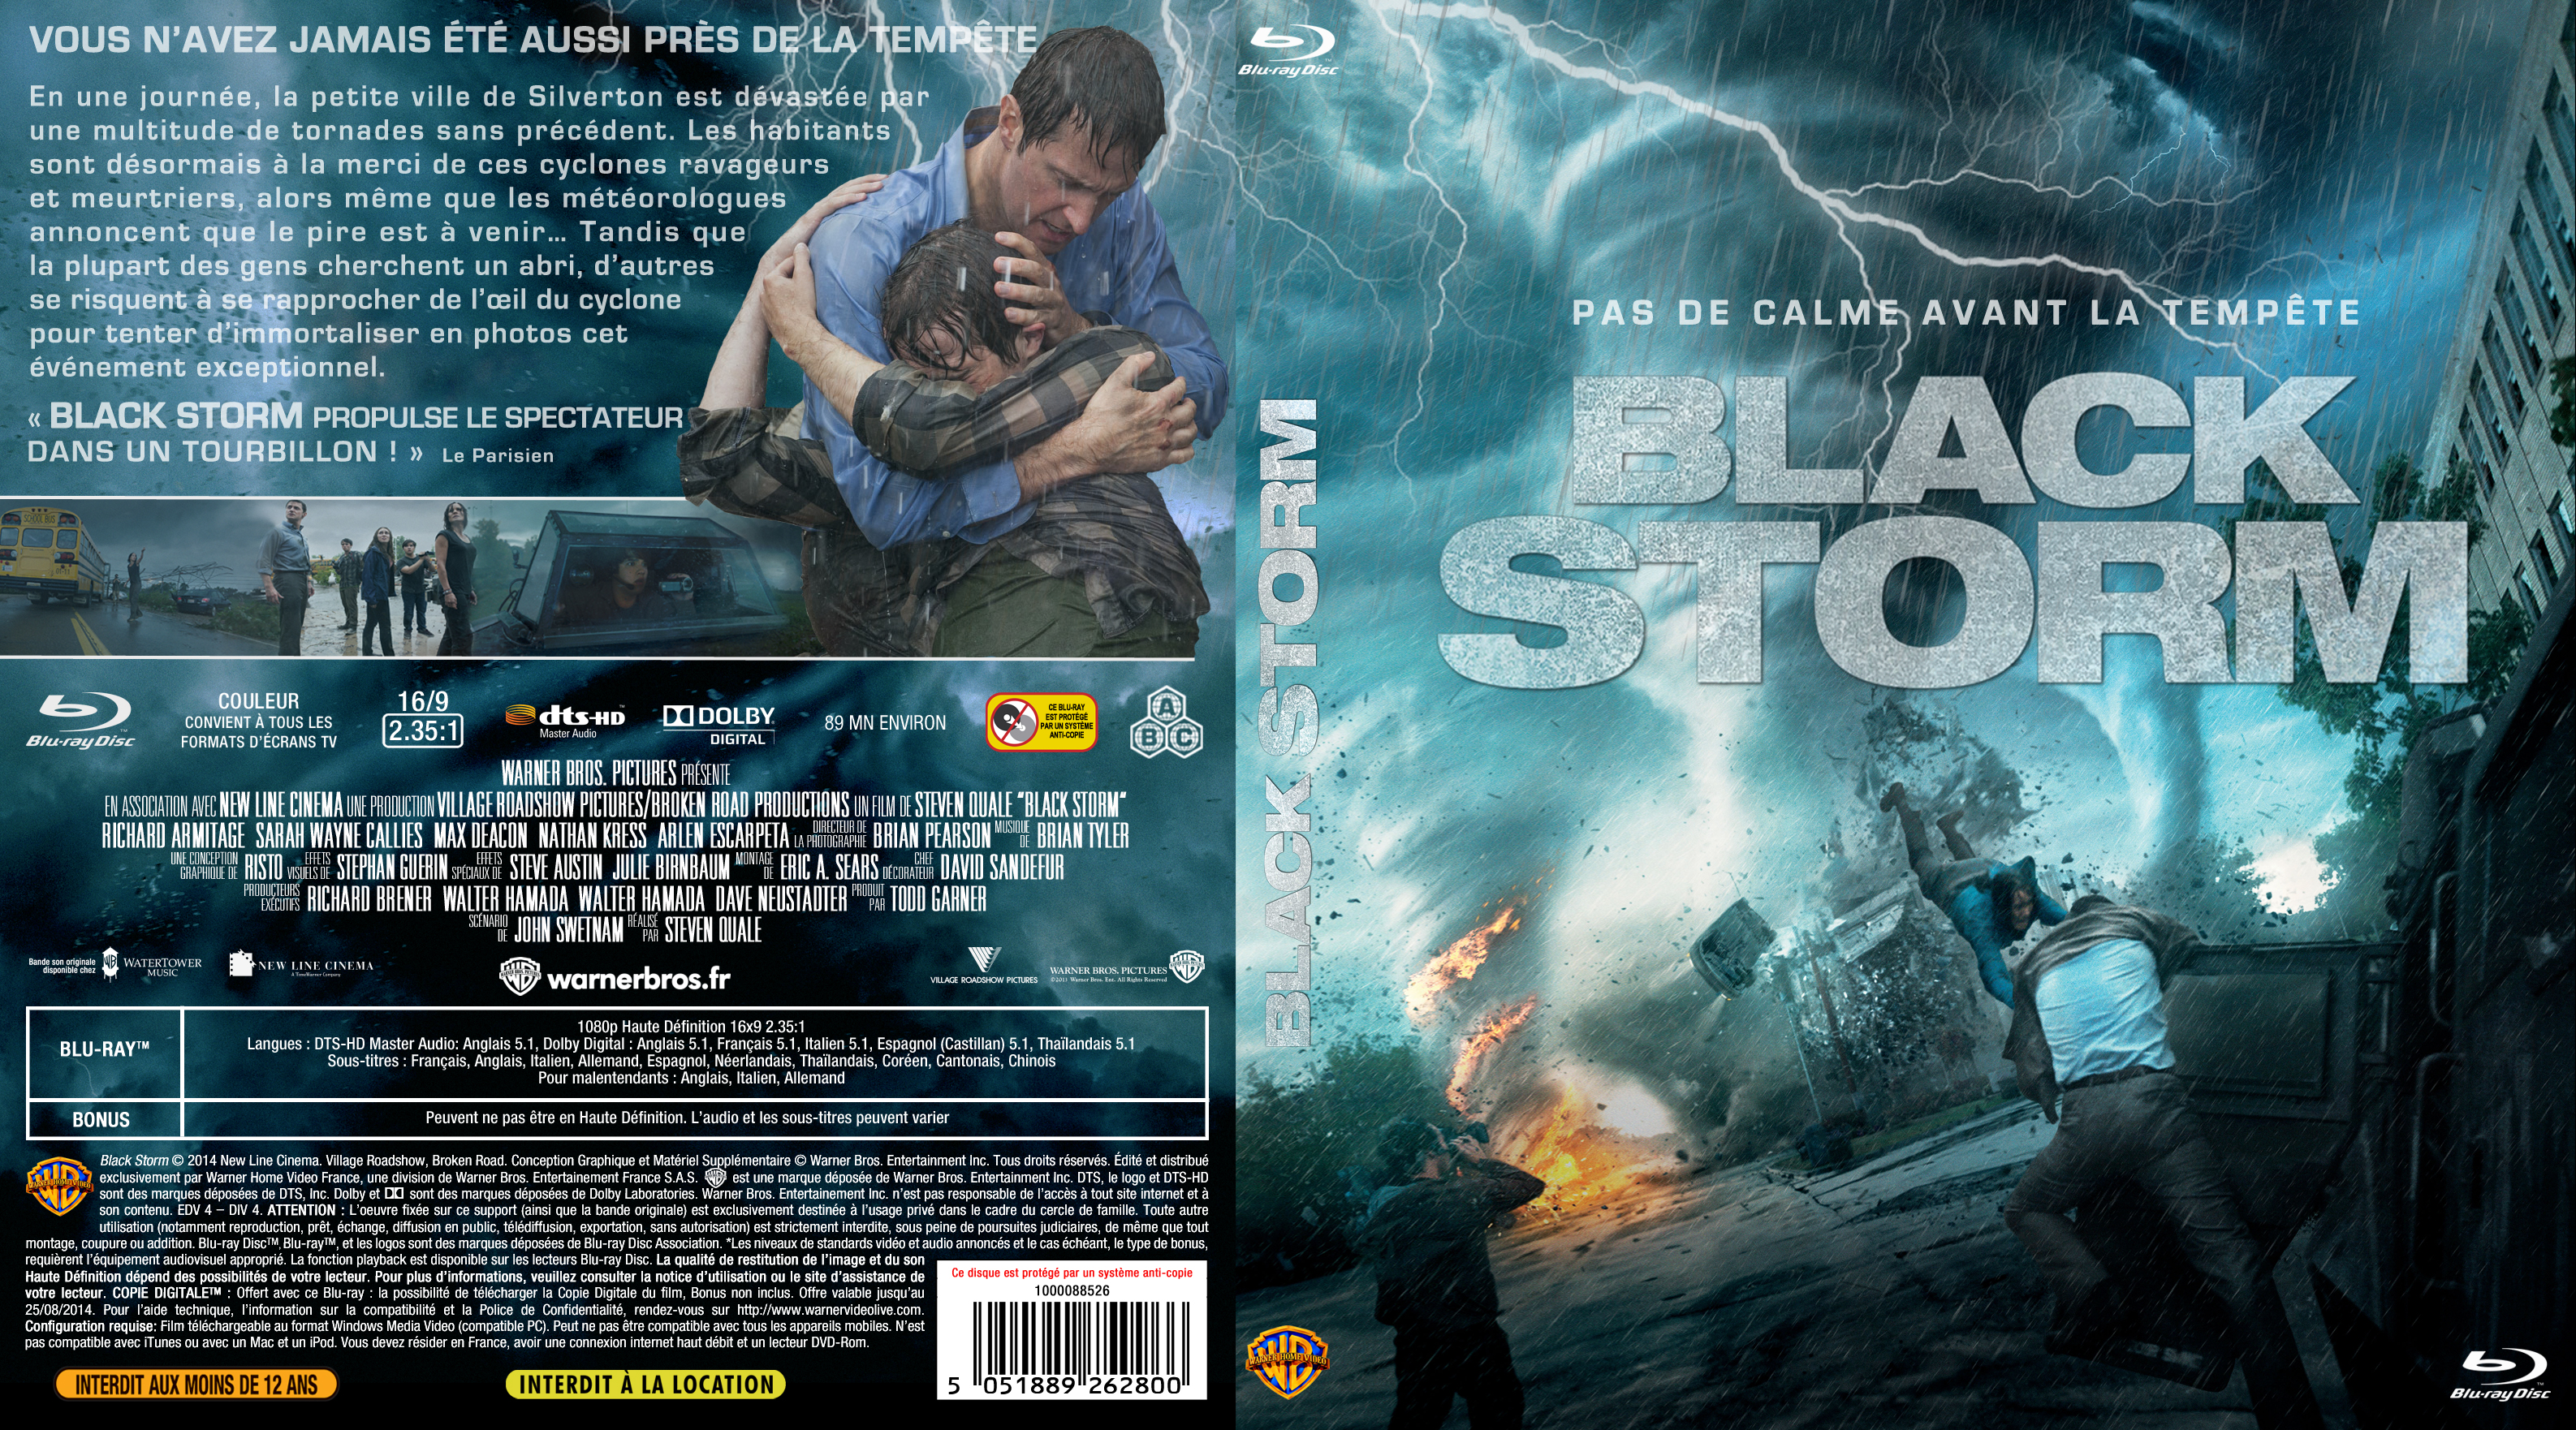 Jaquette DVD Black storm custom (BLU-RAY)